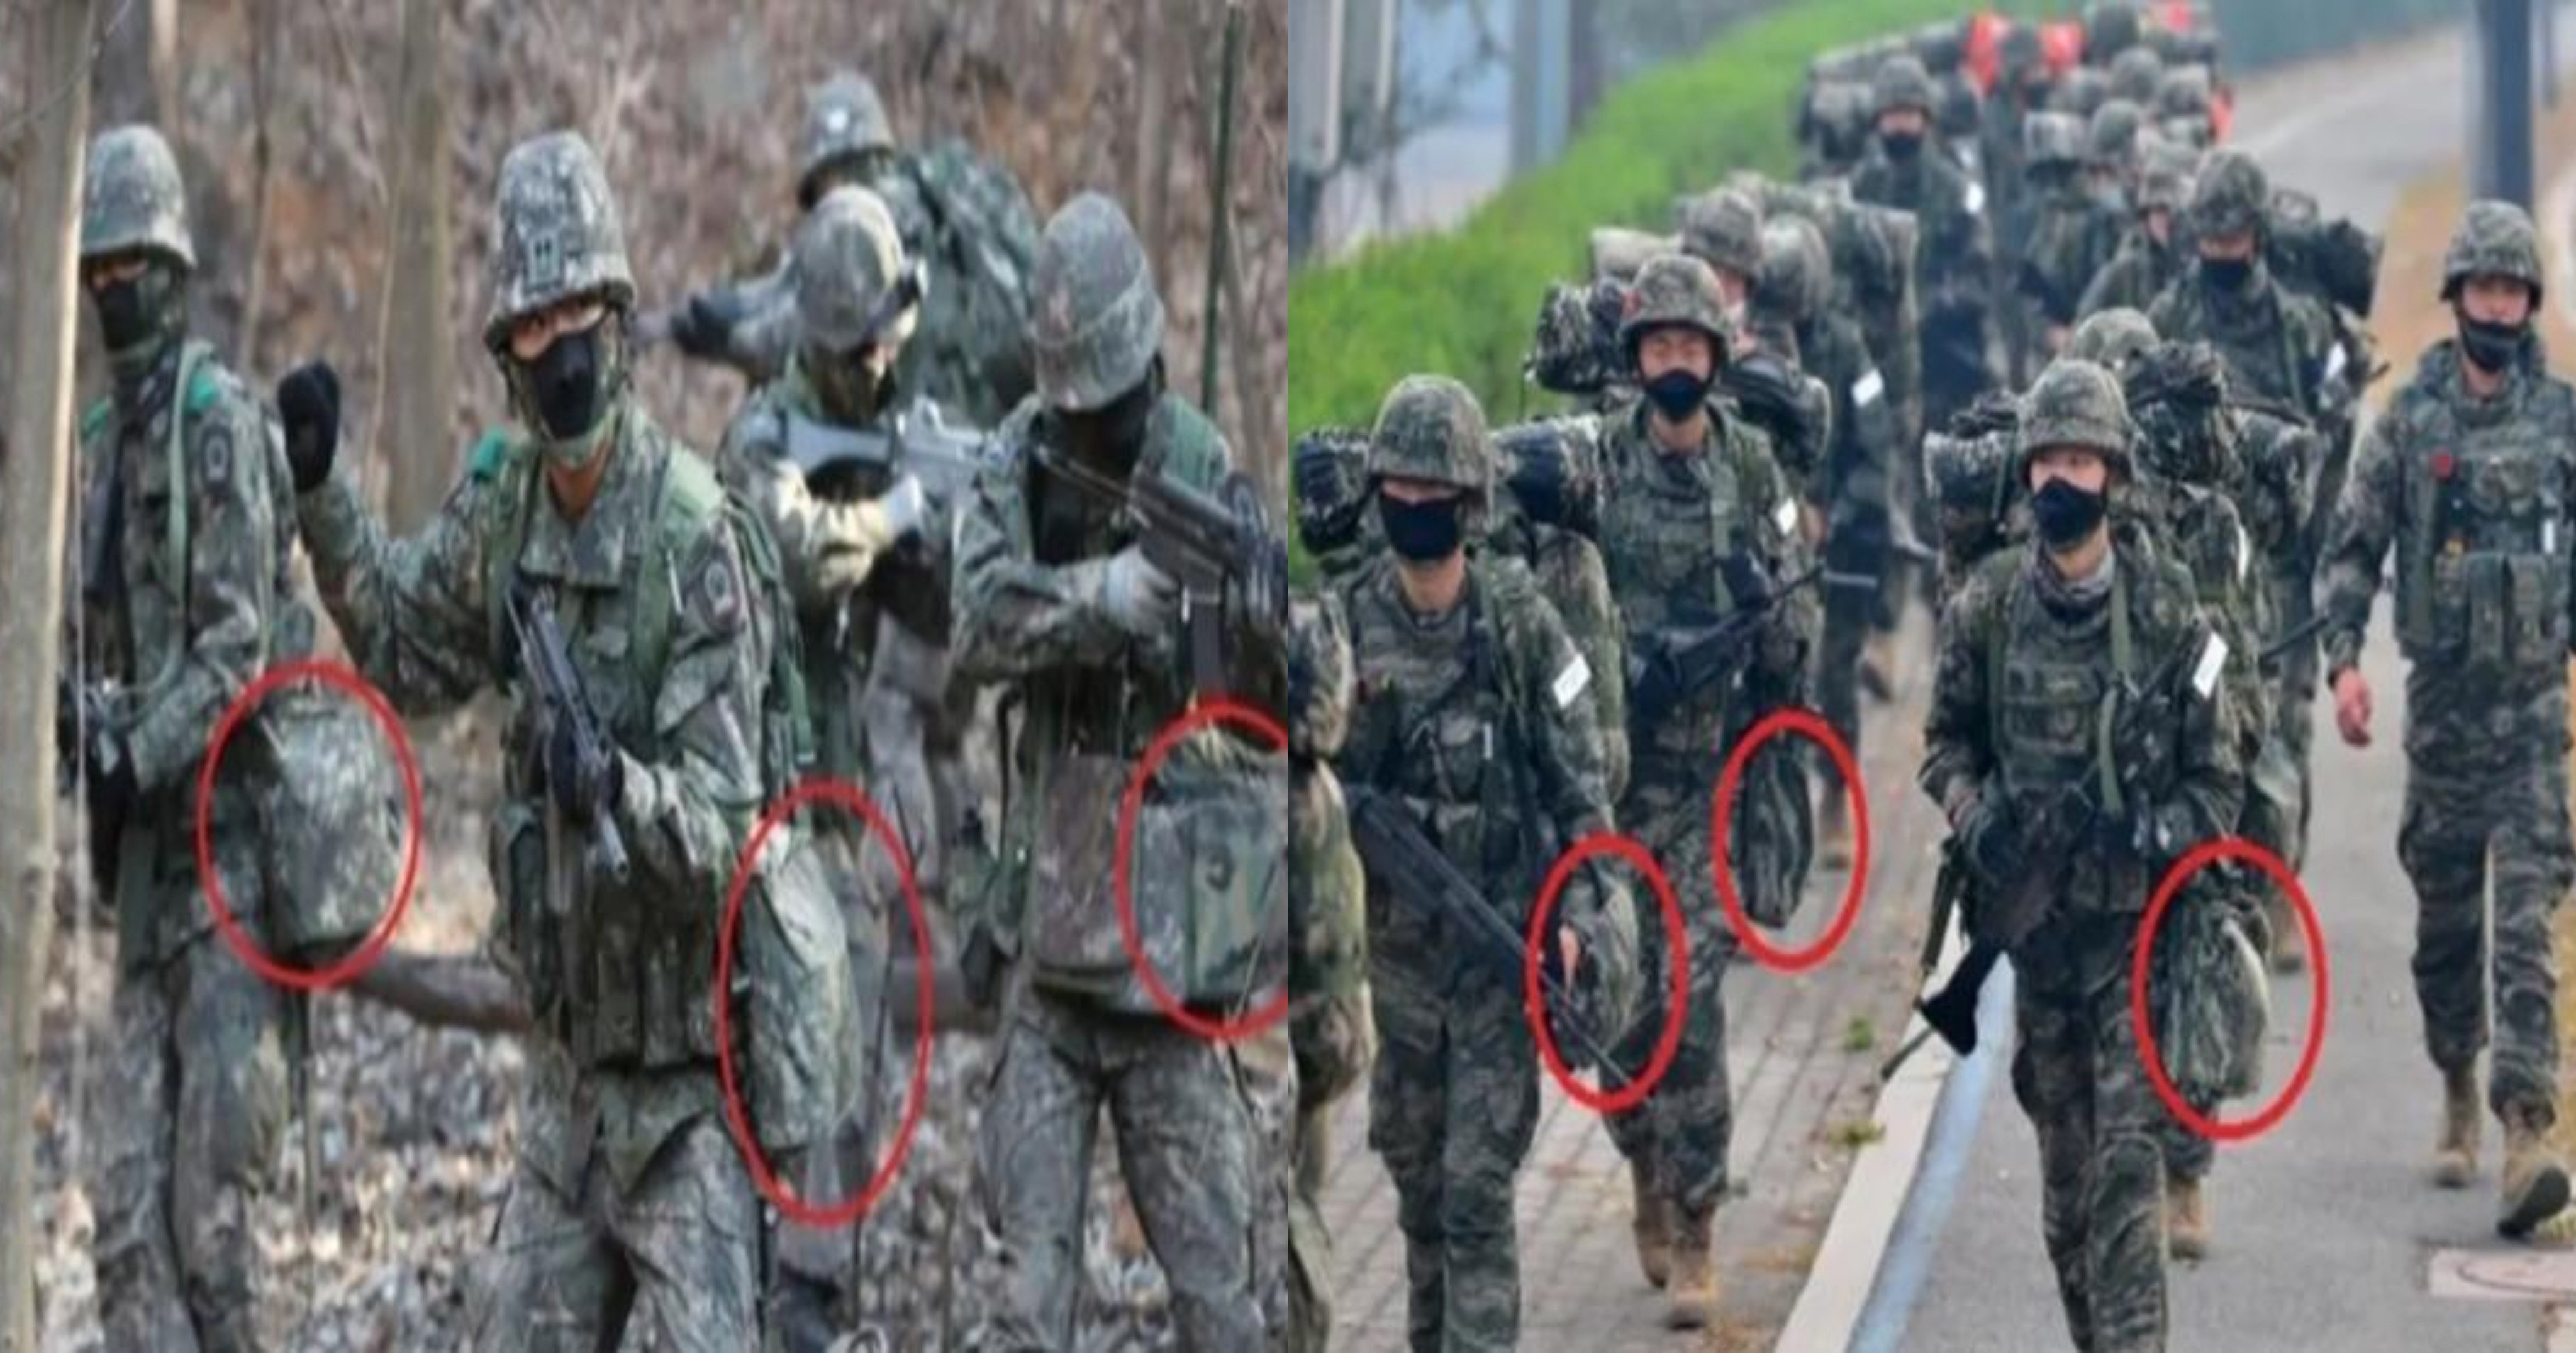 695a53af e95c 4129 a09f 72d45356bbca.jpeg?resize=412,232 - 서양 밀덕들이 한국 군인들 사진을 보고 너무 궁금증 폭발하는 이유